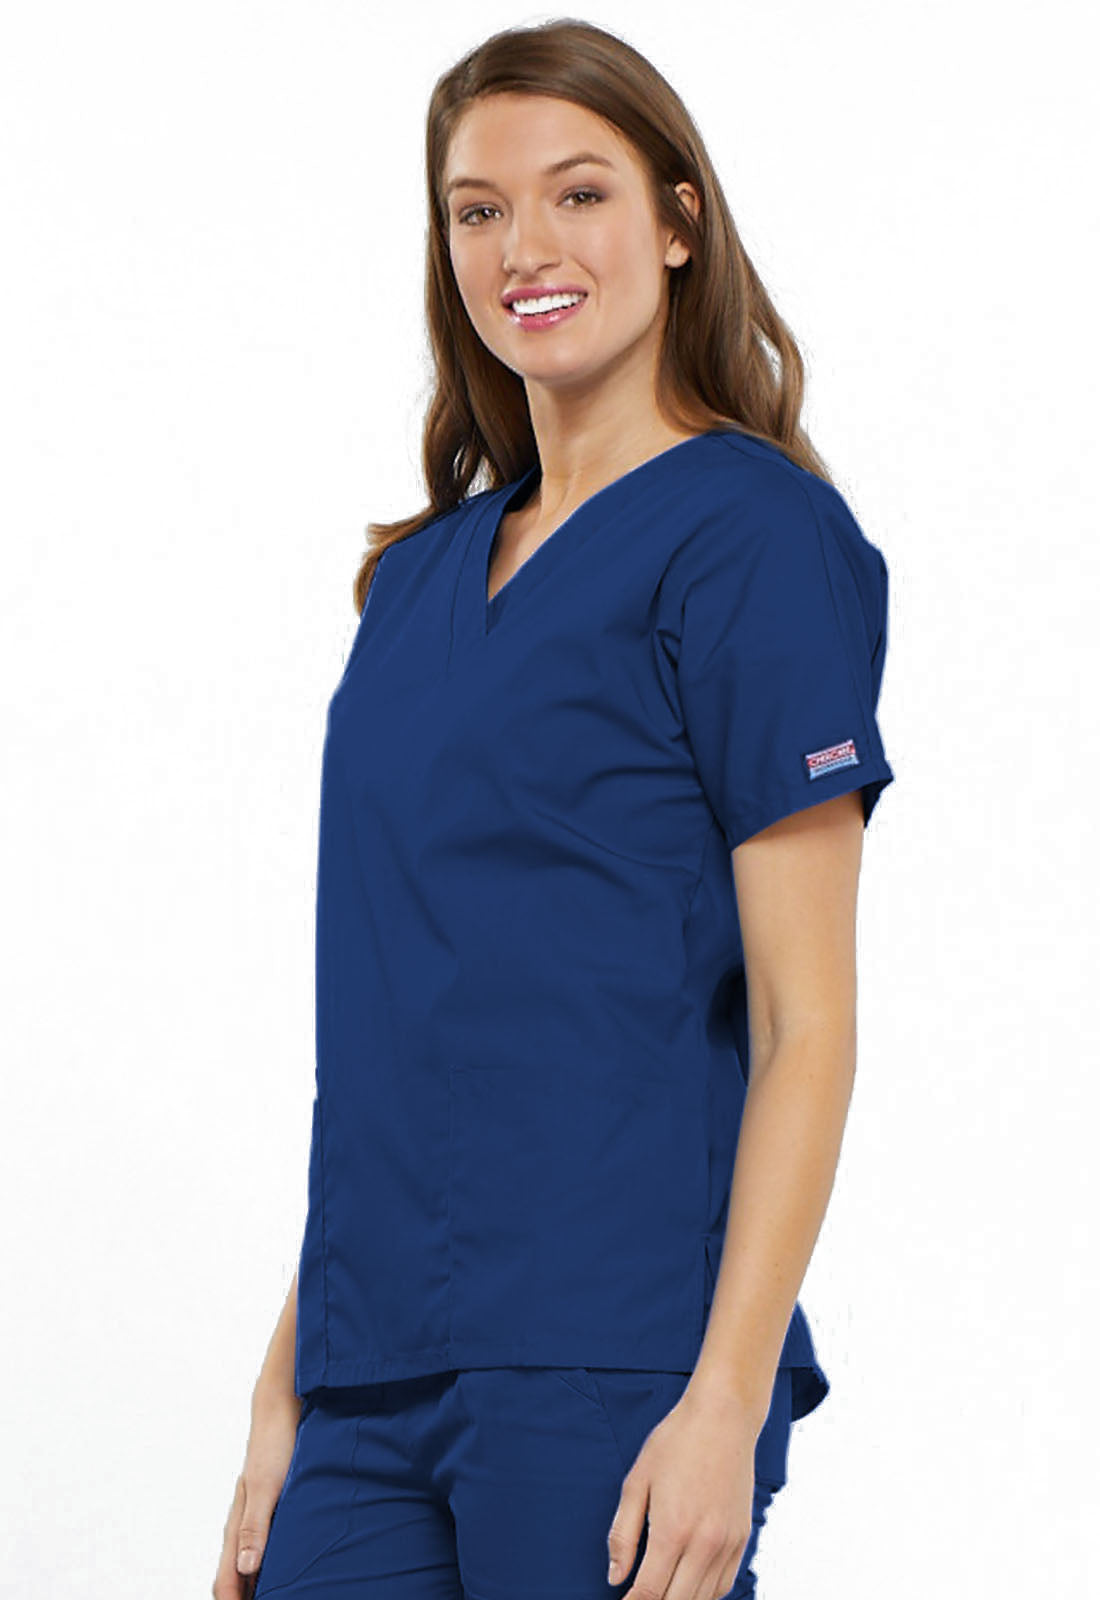 Frostluinai Savings Clearance Women's Working Uniform Scrubs Top Nursing  Uniform With Three Pockets Short Sleeve V-neck Striped Tee 